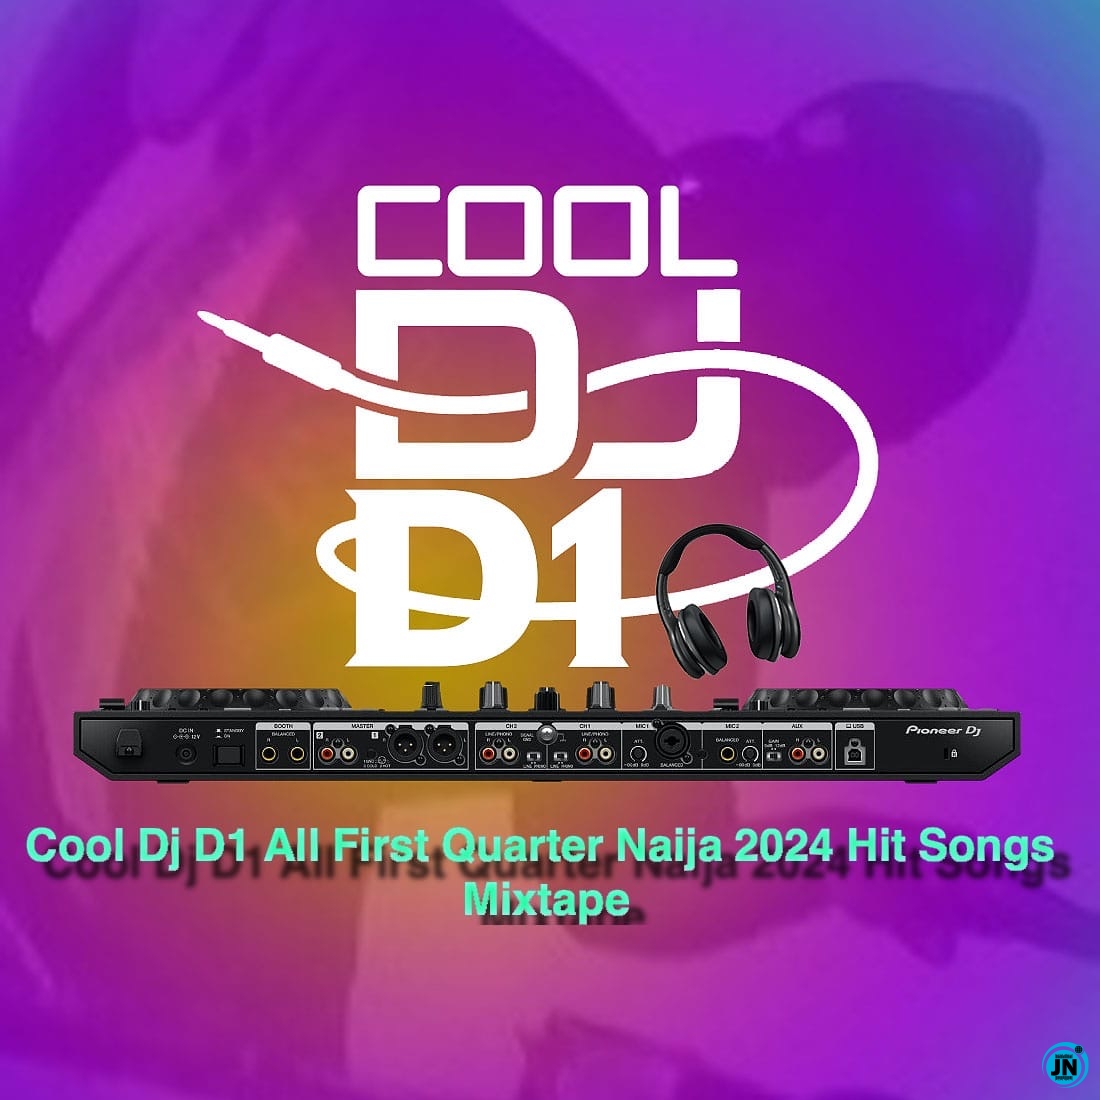 Cool DJ D1 – All First Quarter Naija 2024 Hit Songs Mixtape